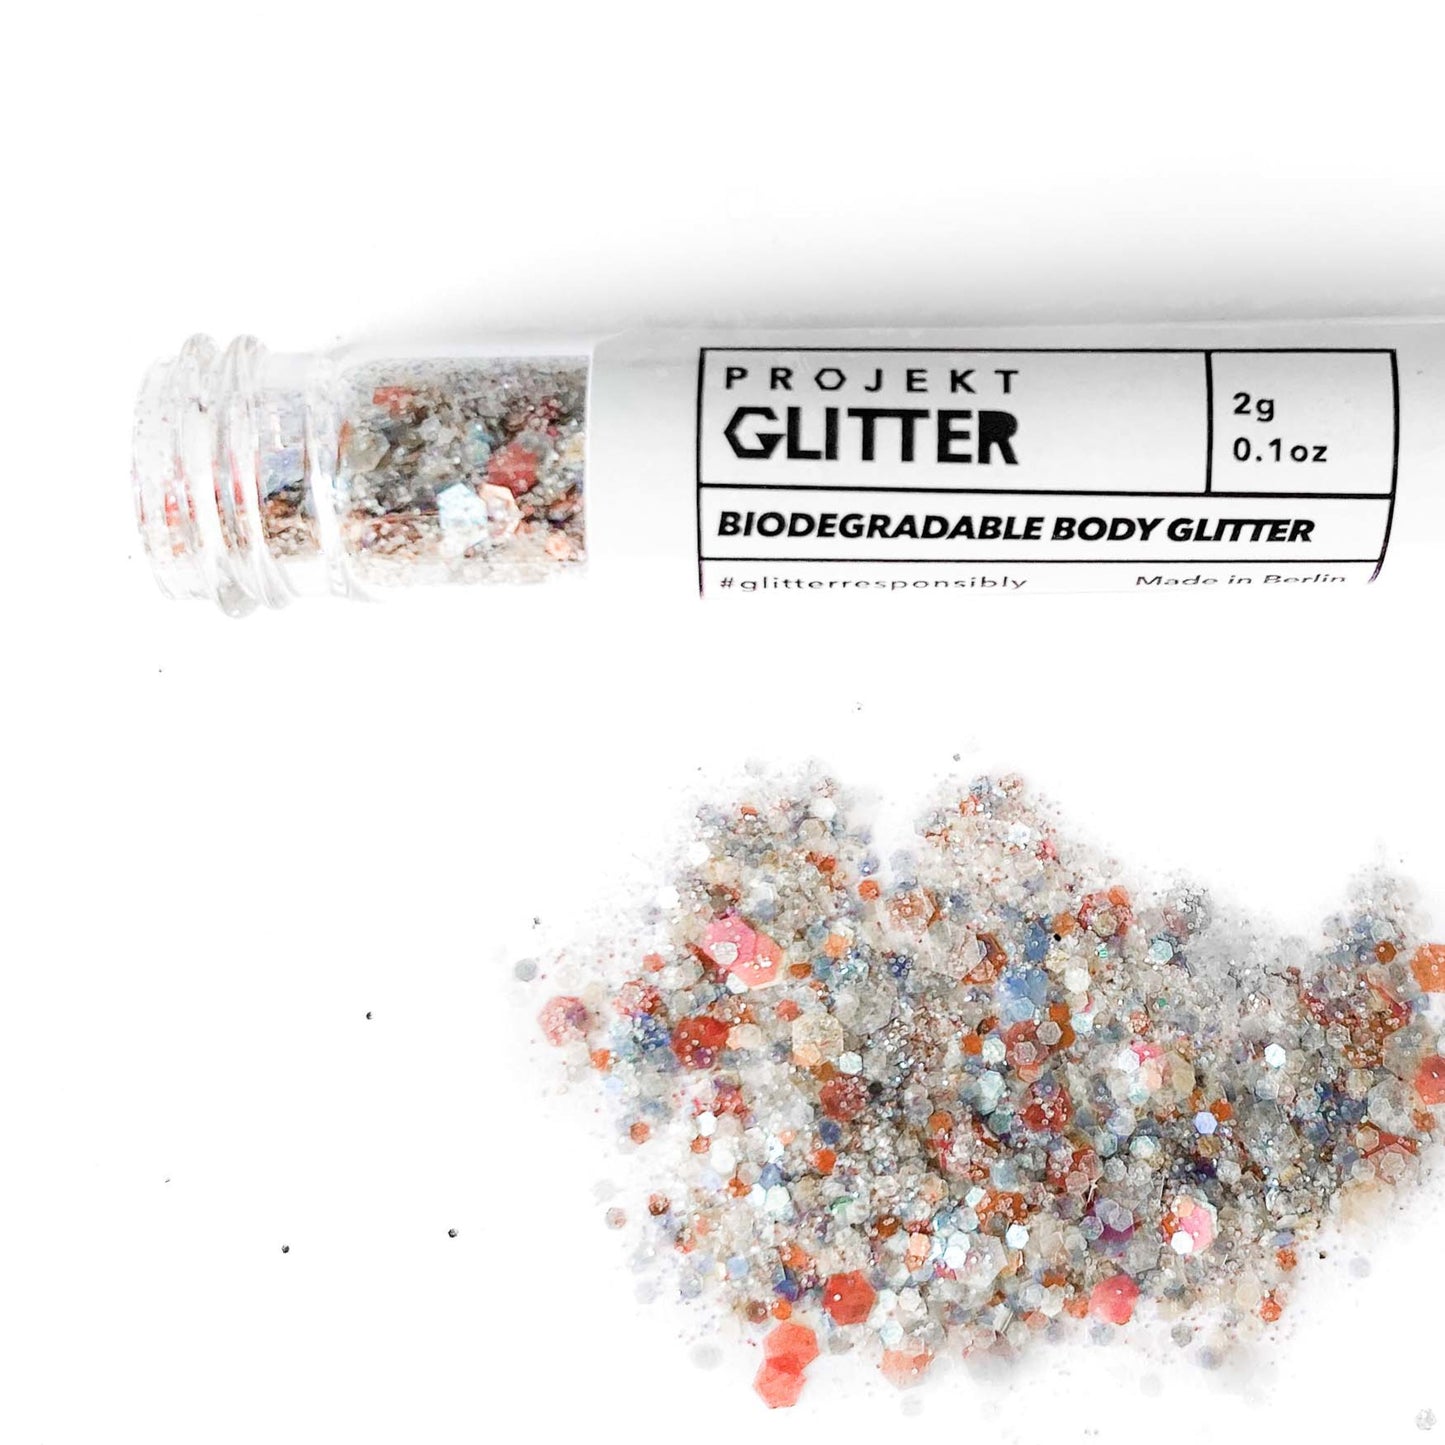 Biodegradable glitter